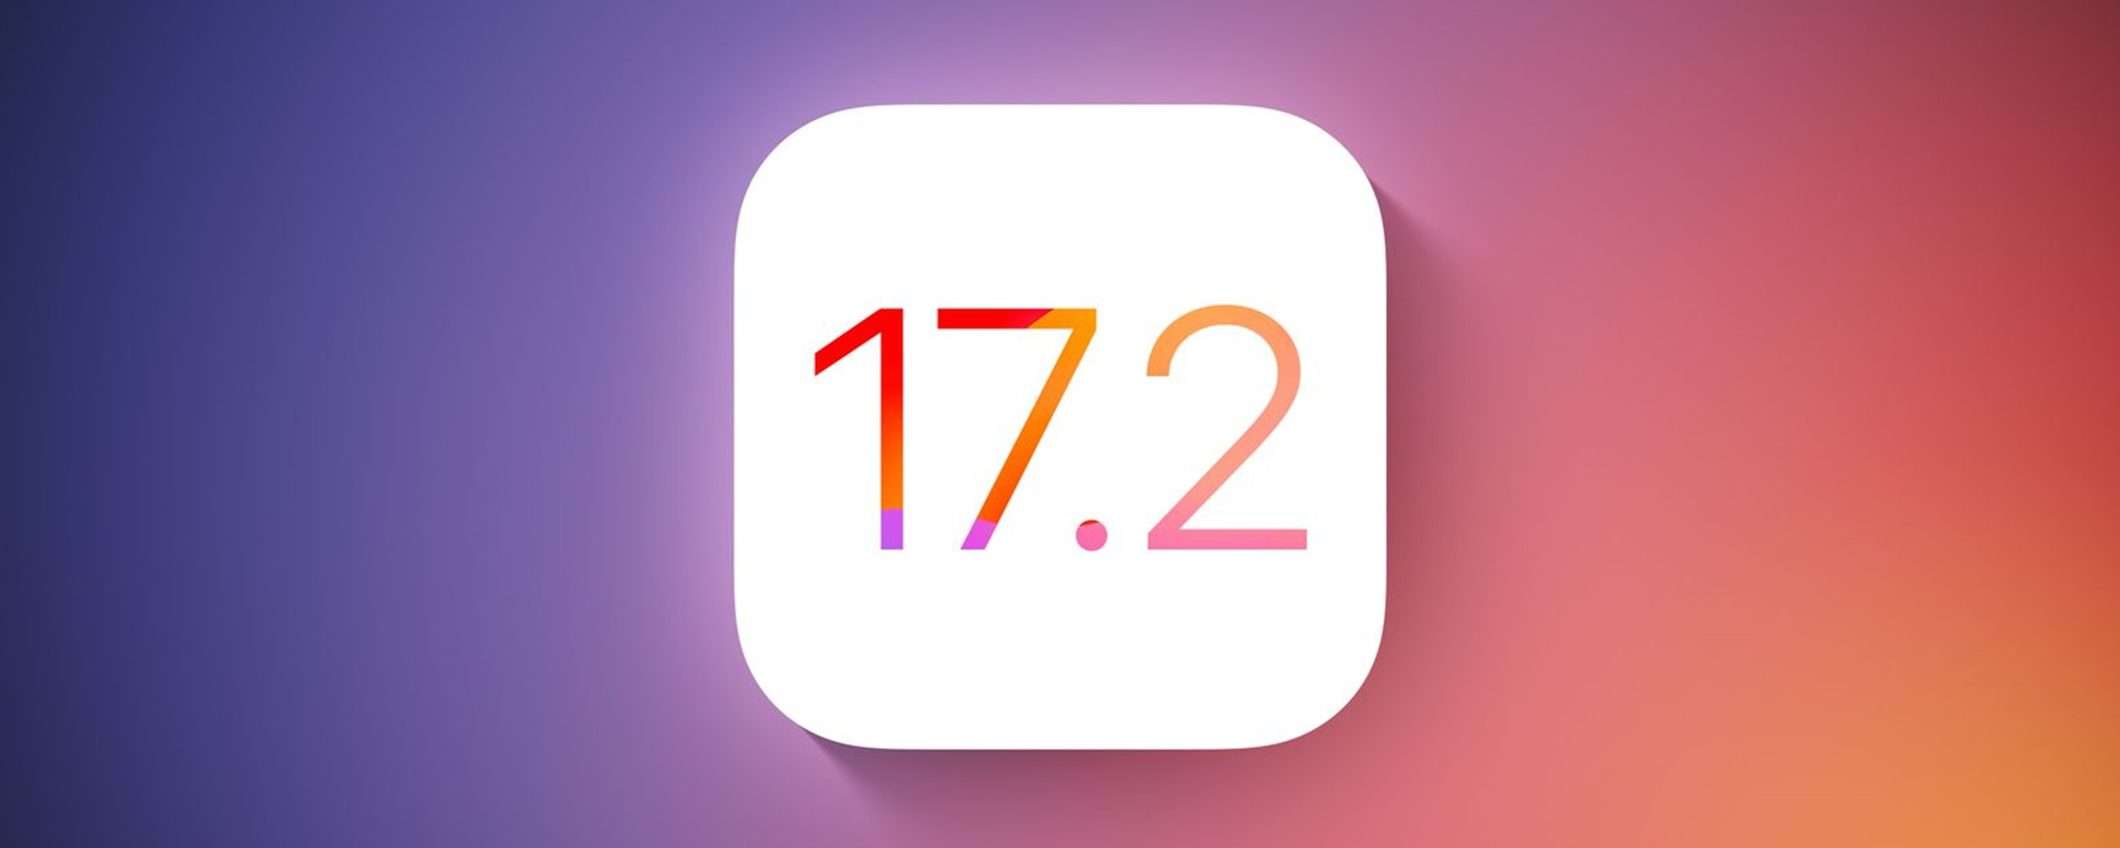 iOS 17.2: ricarica wireless Qi2 su iPhone 13 e iPhone 14